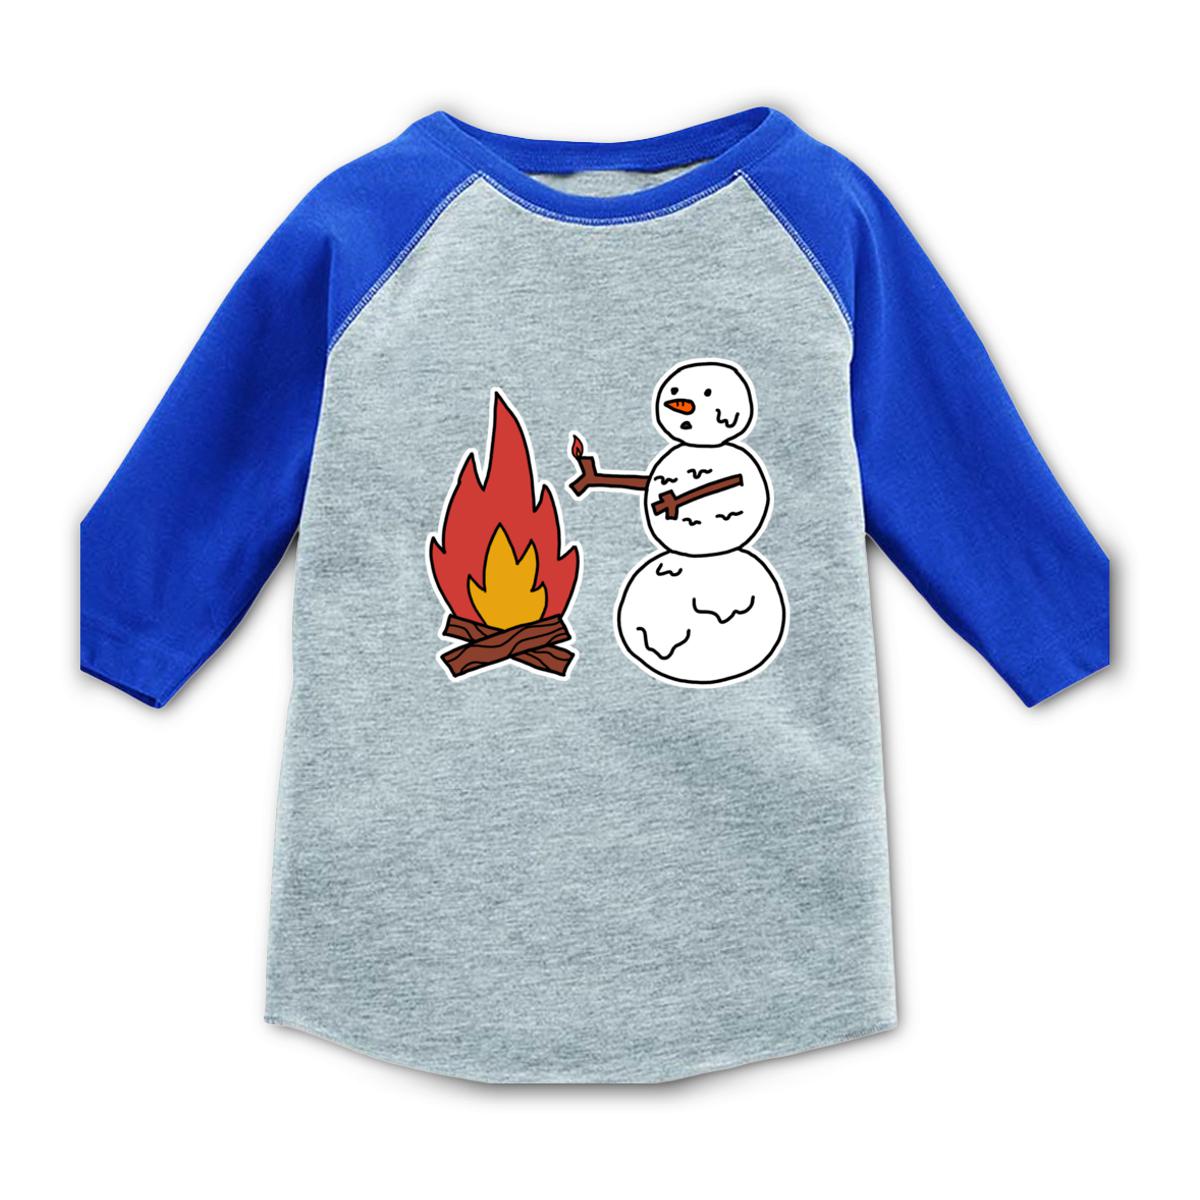 Snowman Keeping Warm Toddler Raglan Tee 4T heather-royal